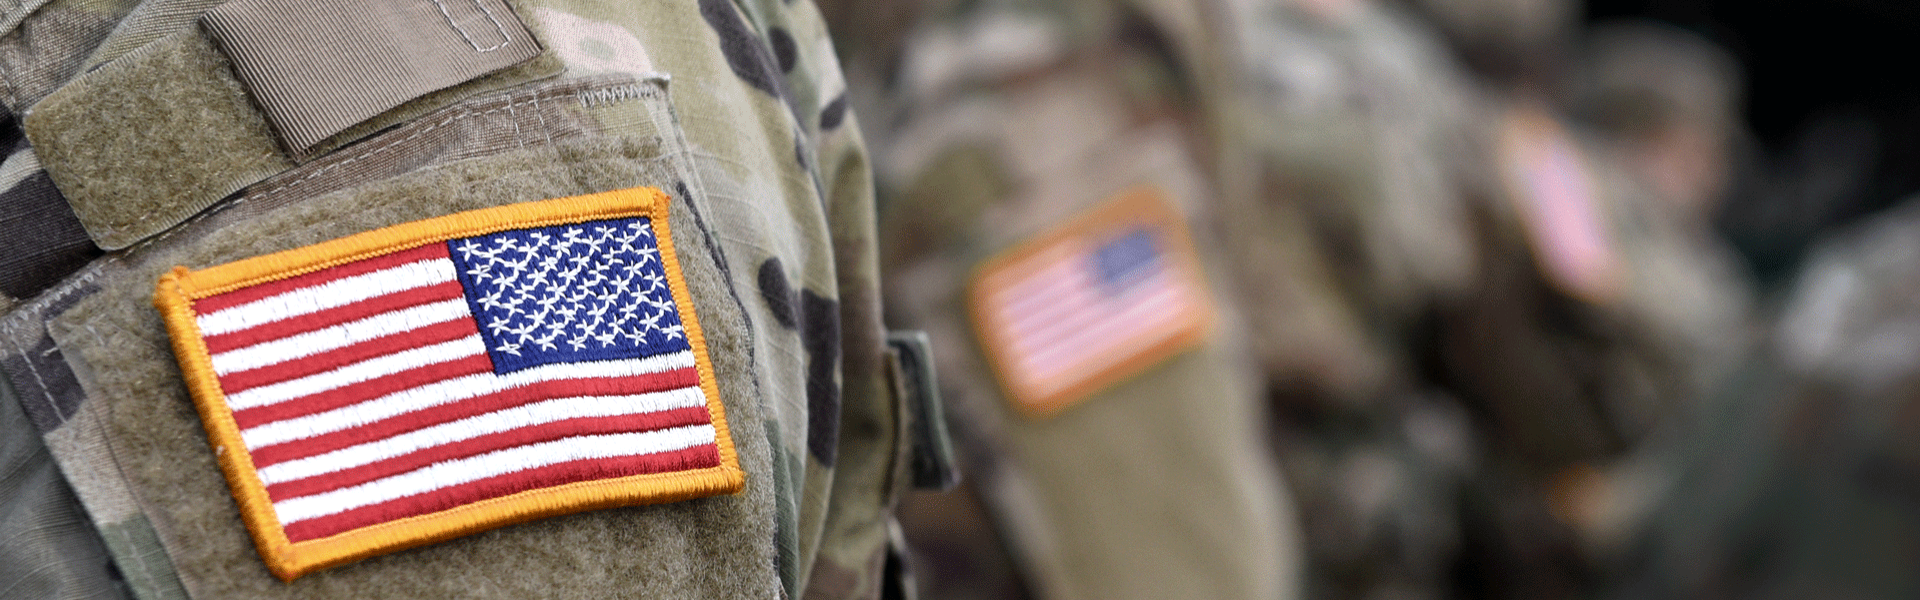 American flag patch on an army uniform